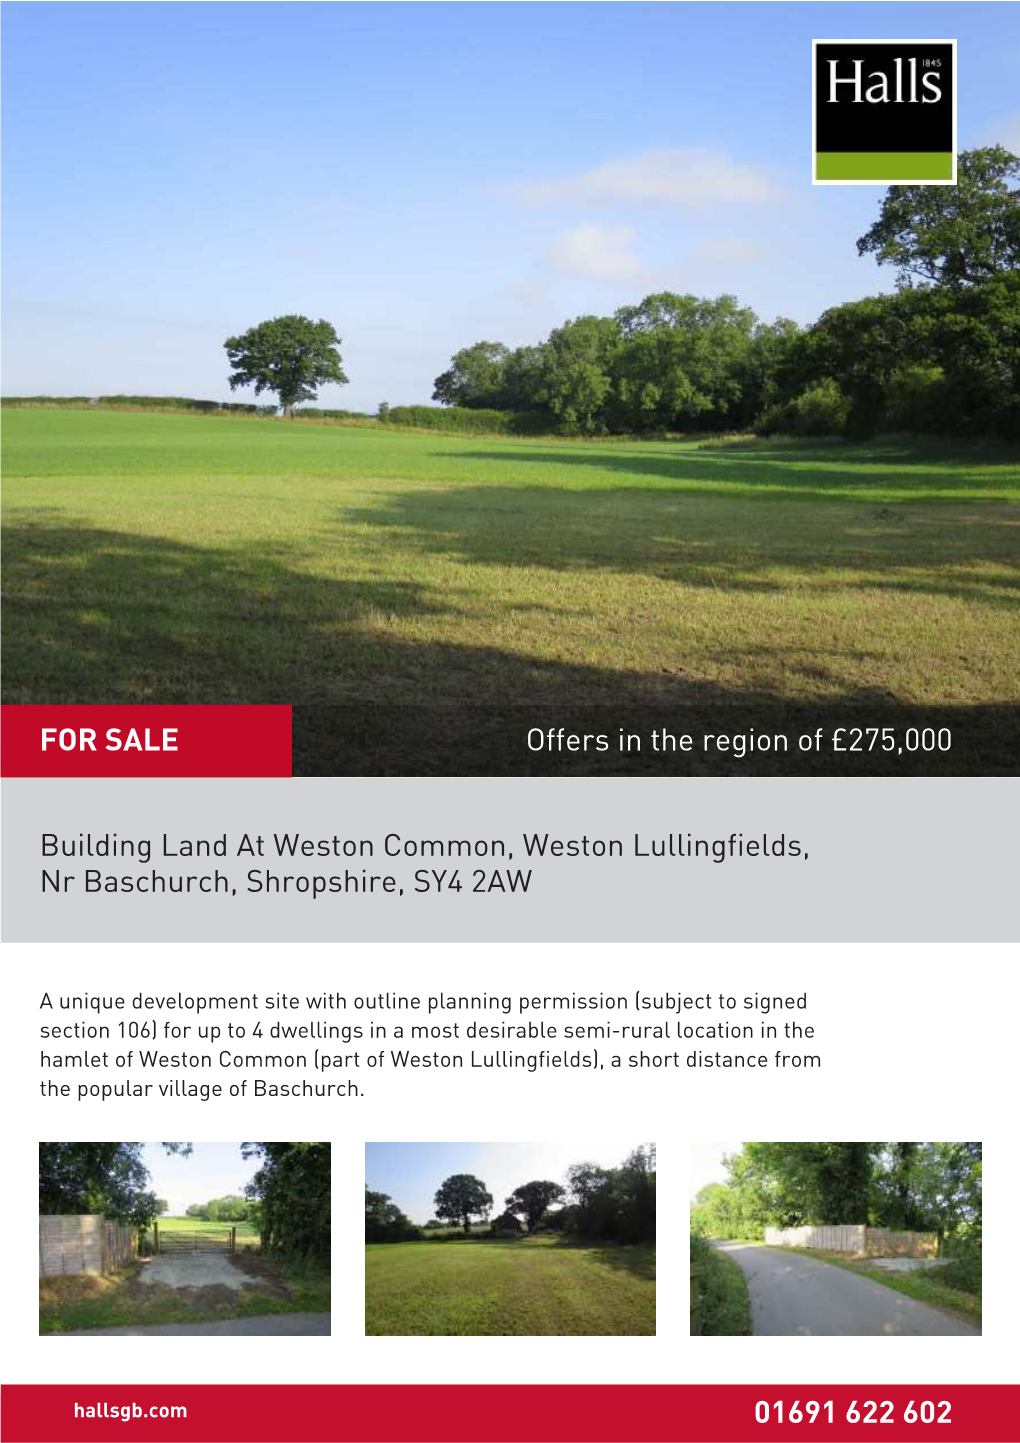 Building Land at Weston Common, Weston Lullingfields, Nr Baschurch, Shropshire, SY4 2AW